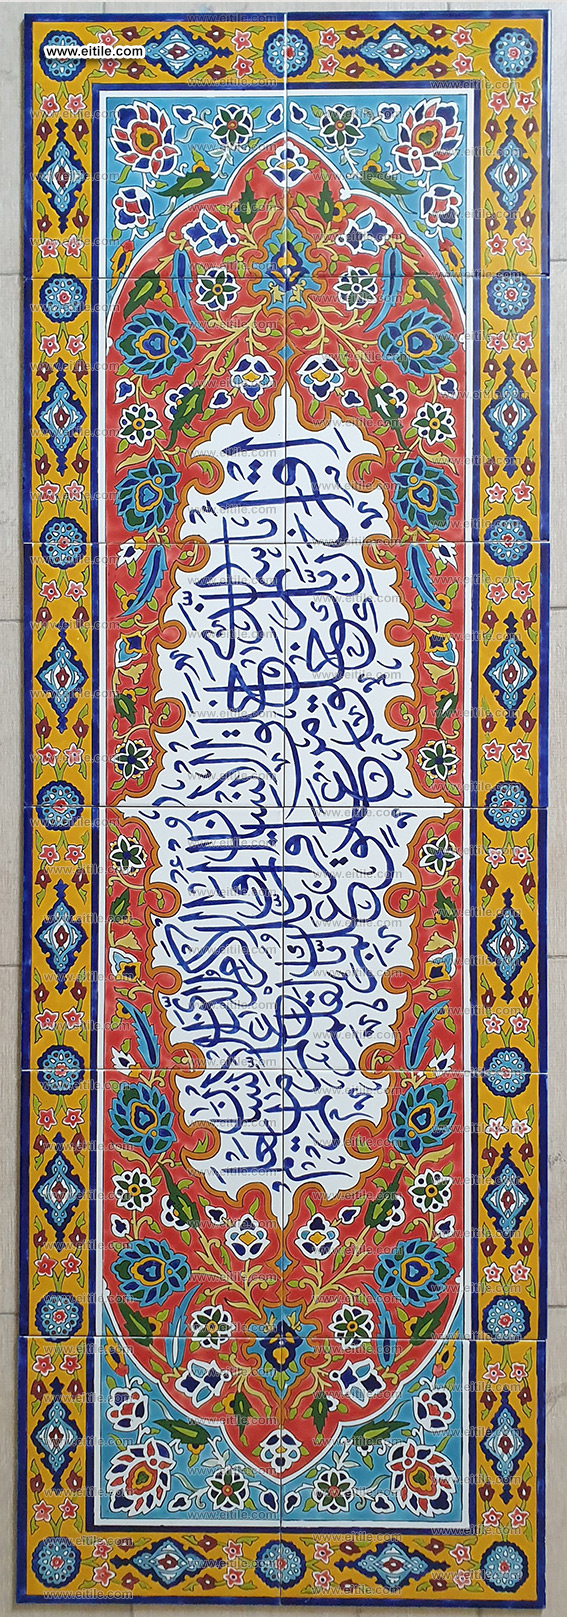 wall frame made with Islamic handmade tiles, www.eitile.com